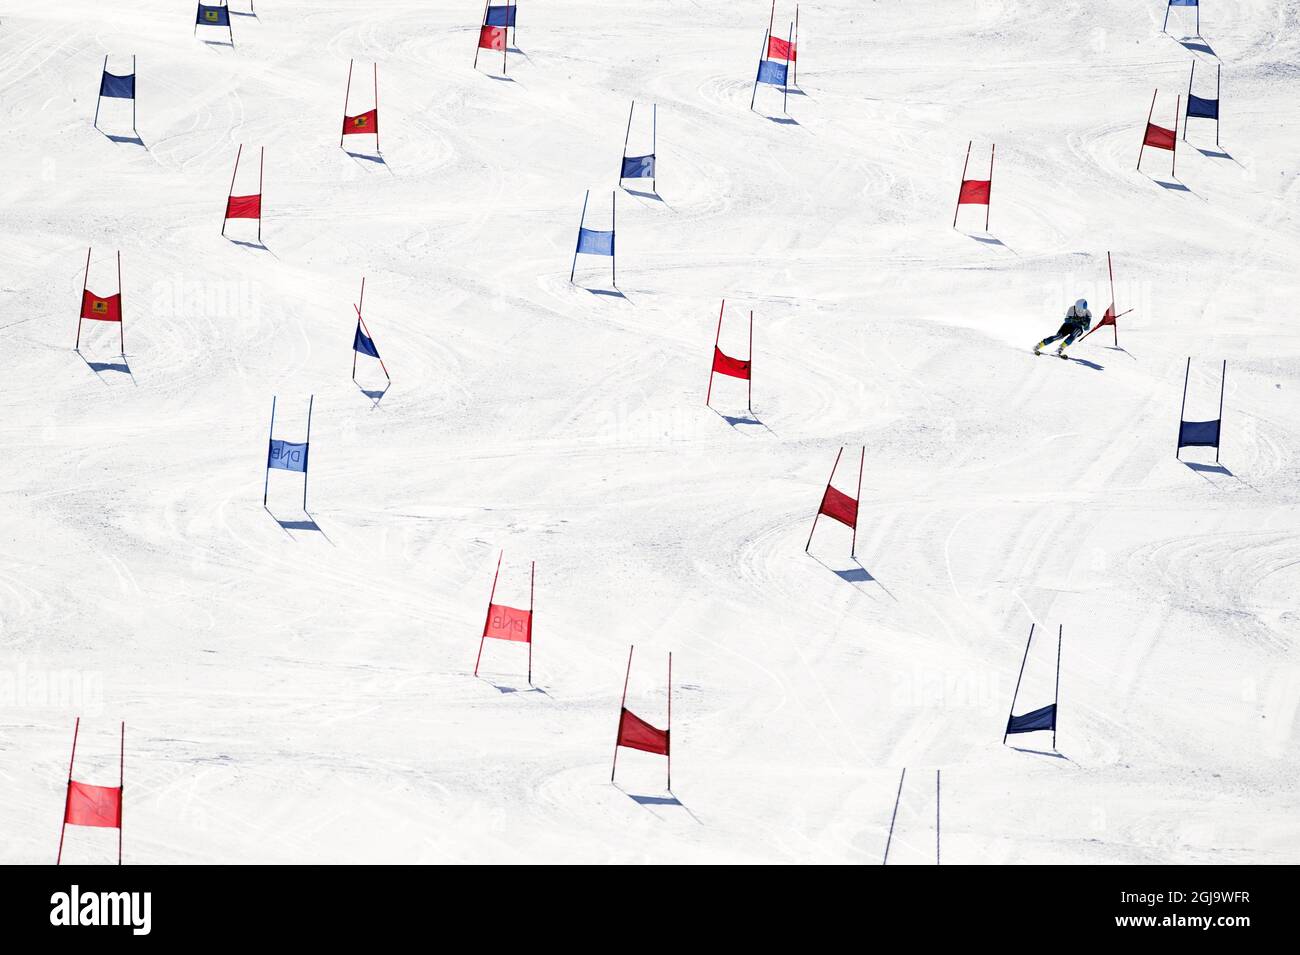 VAL SENALES 2015-10-25 Slalom training at Val Senales, Italy. Foto Ulf Palm / TT Kod 71515 alpine ski, skiing, ski, sports, slalom gates,course, piste  Stock Photo